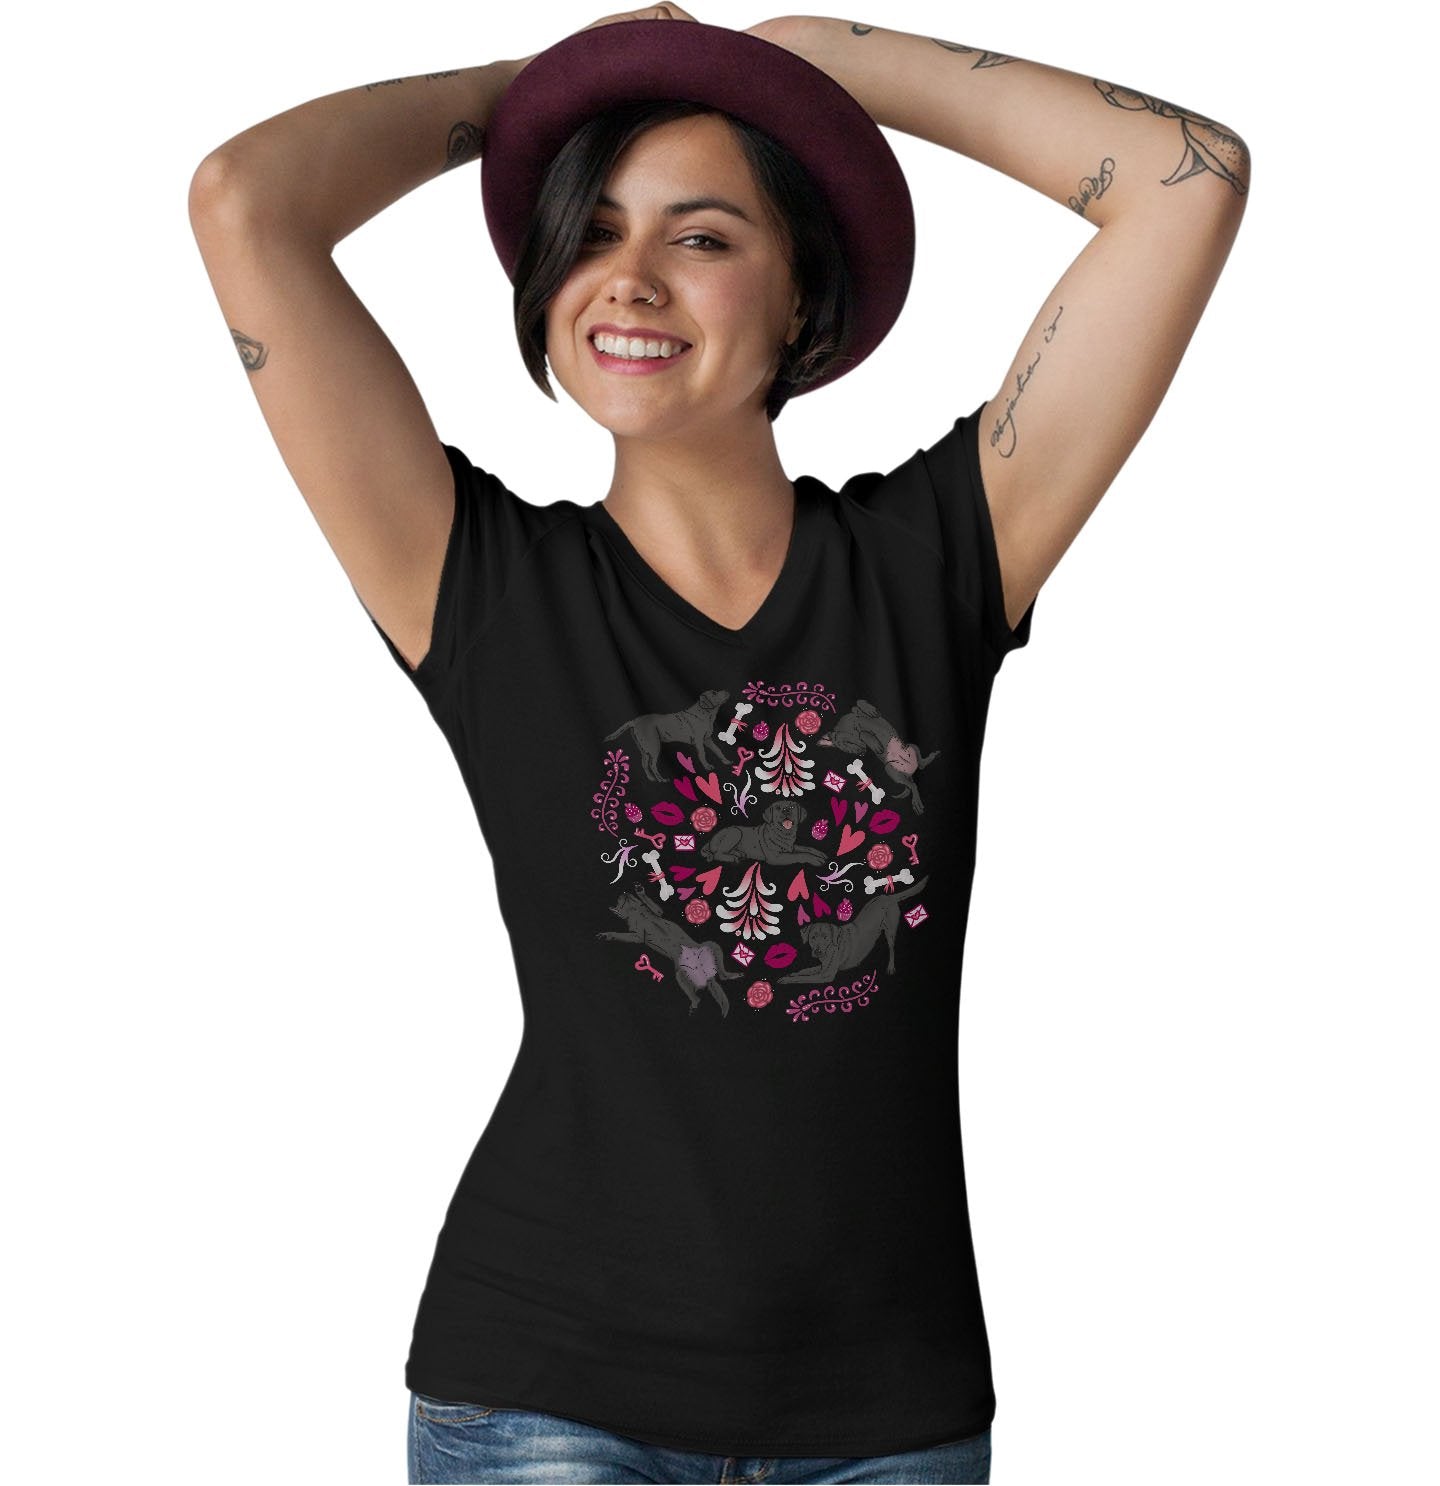 Black Labrador Pink Fleur Pattern - Women's V-Neck T-Shirt